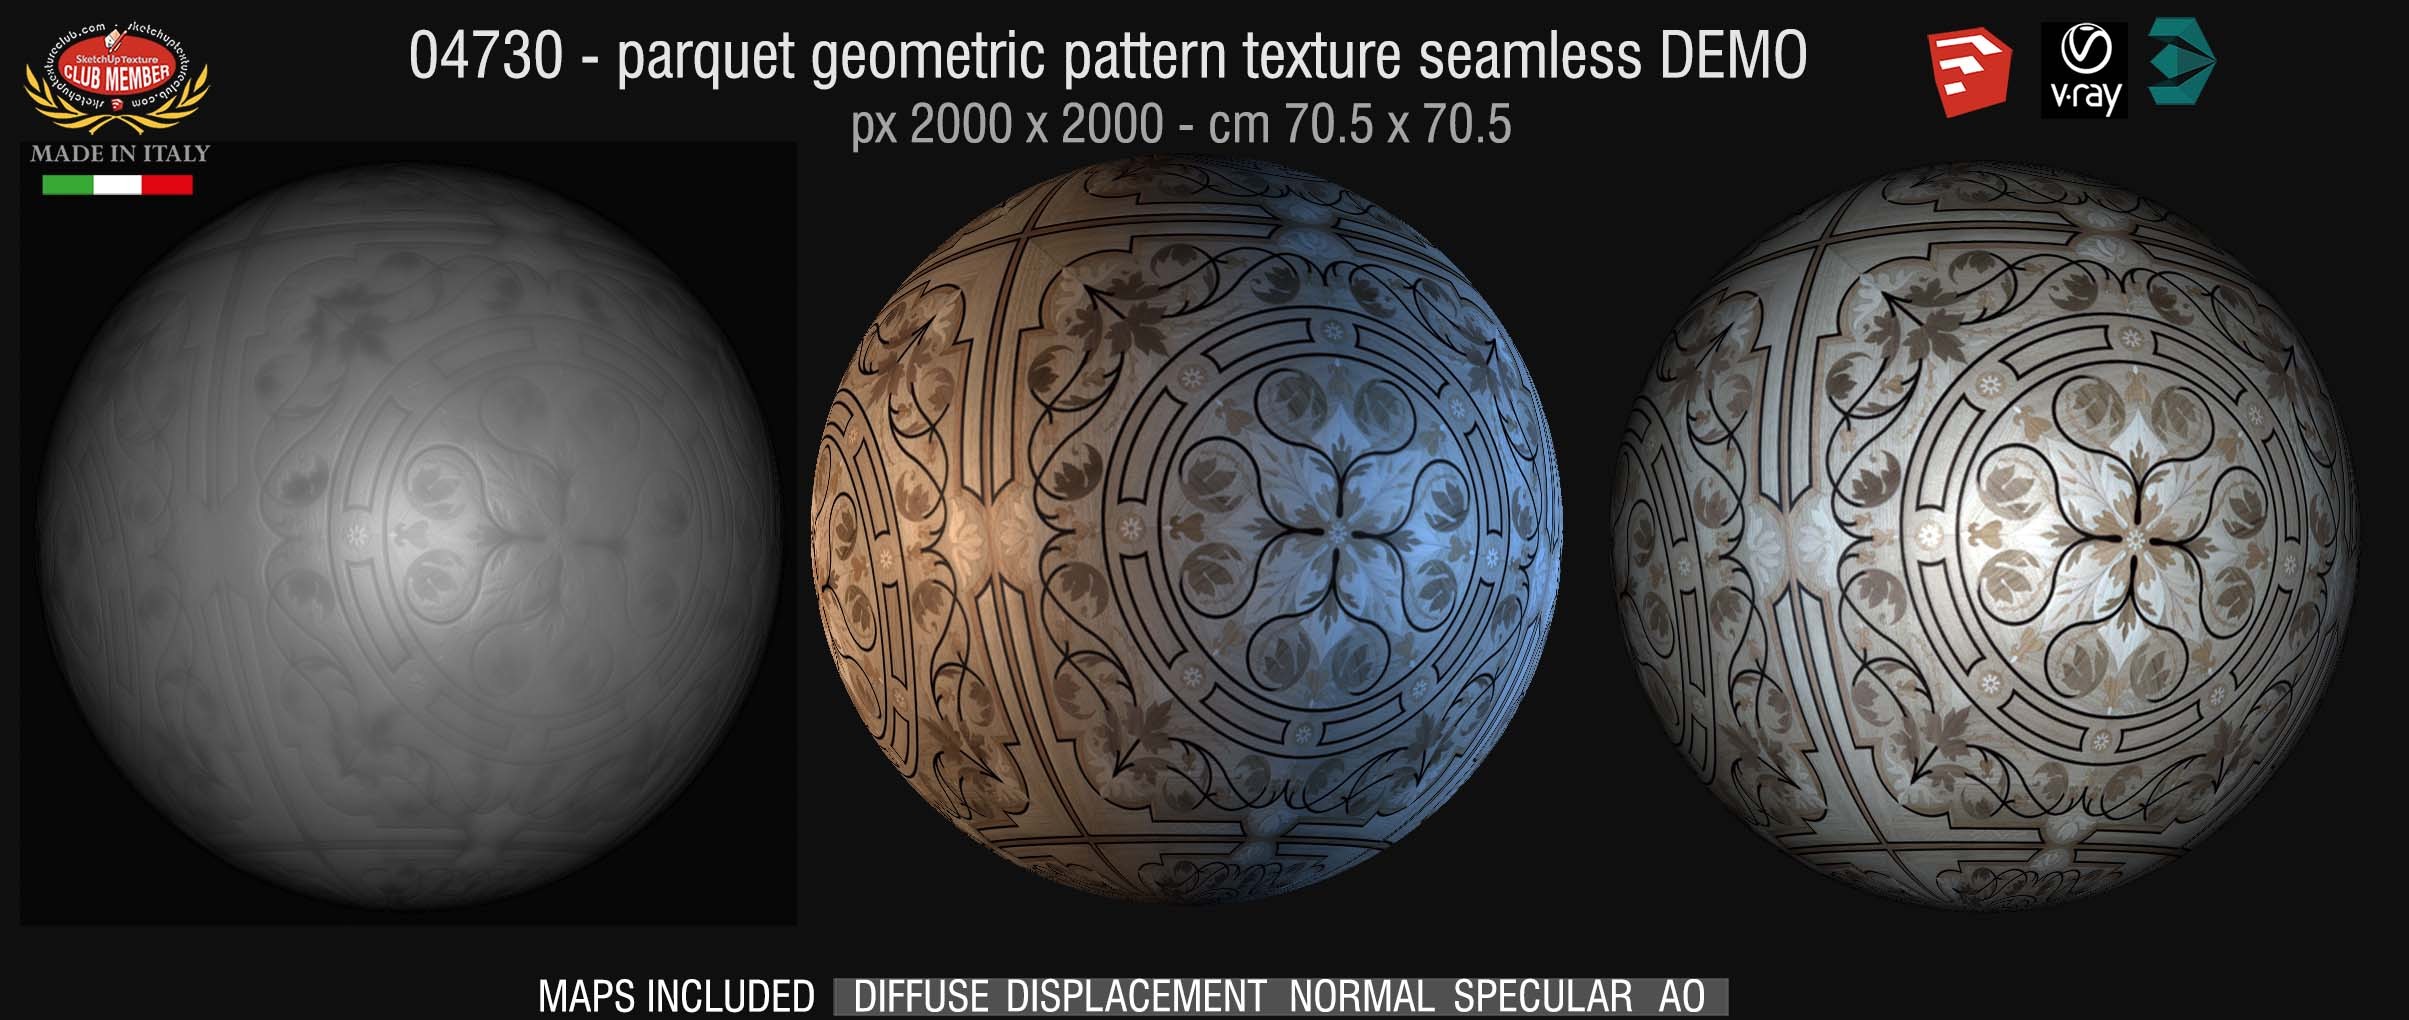 04730 HR Parquet geometric pattern texture seamless + maps DEMO